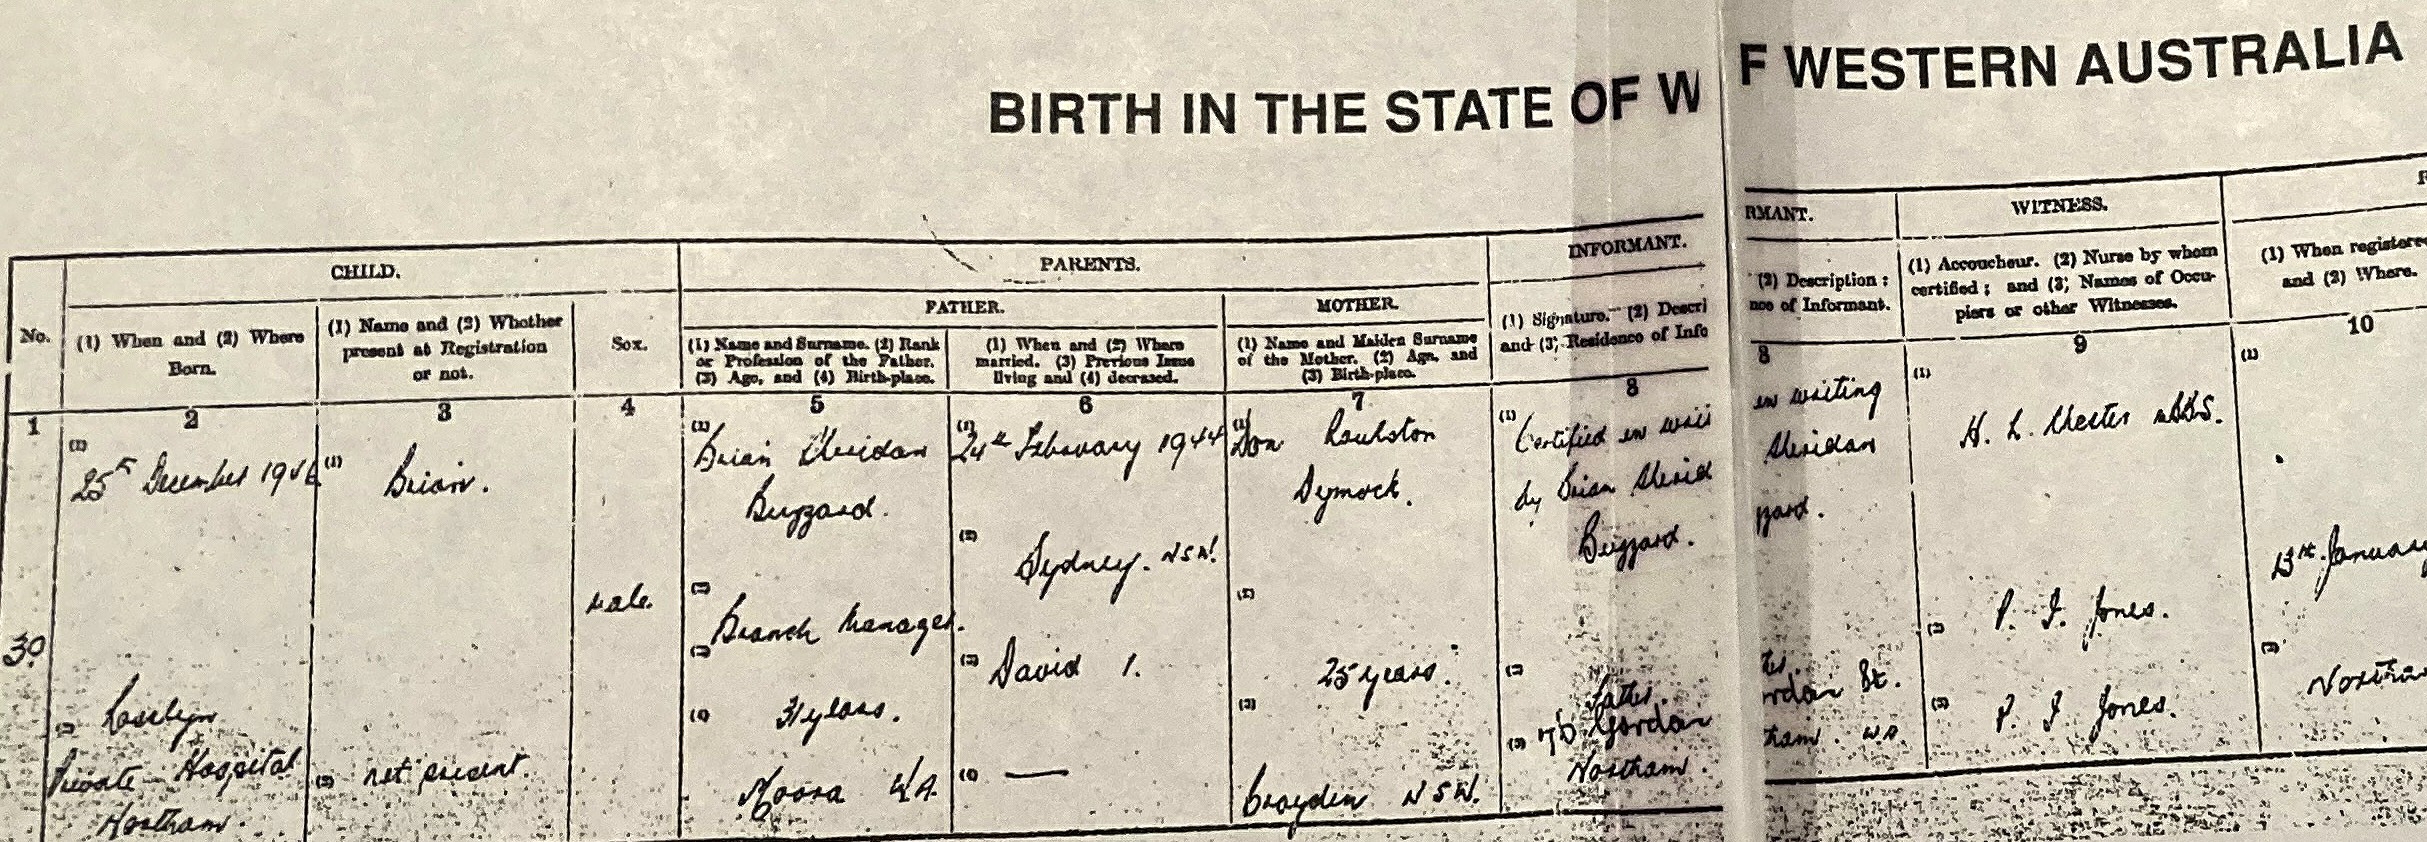 Brian Jnr’s Birth Certificate